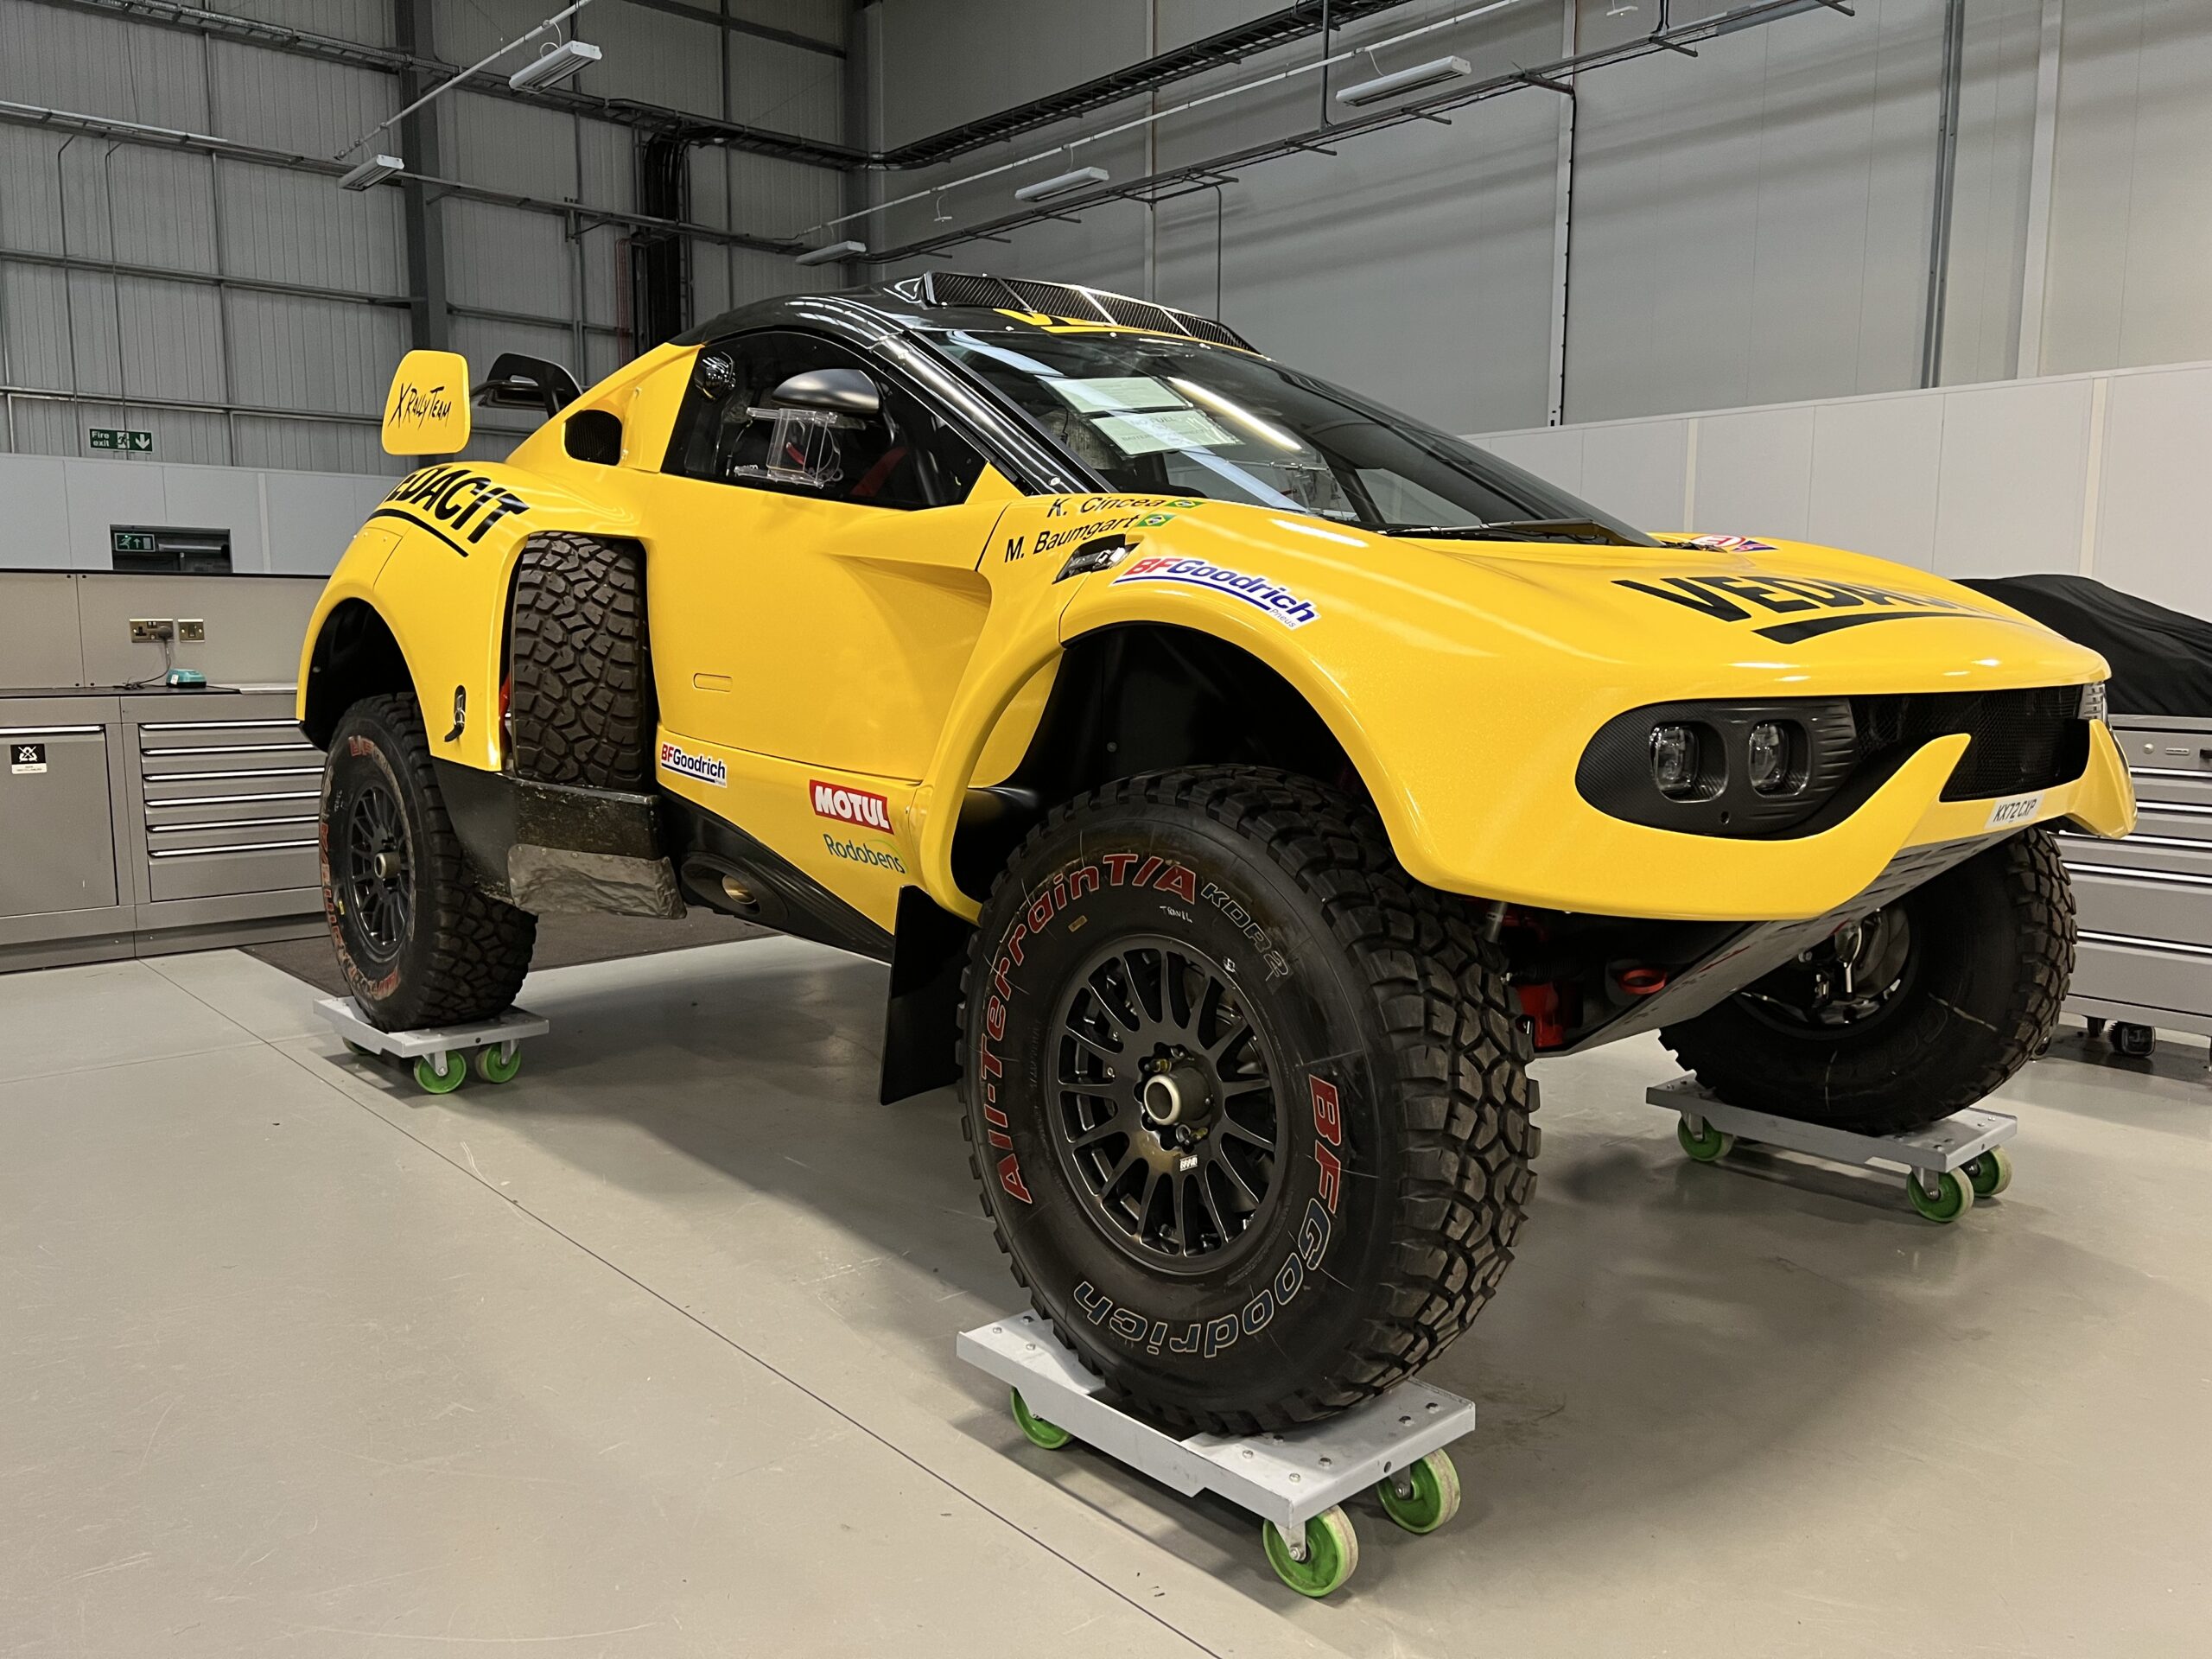 Supercarros - Prodrive Hunter T1+ X Rally Team